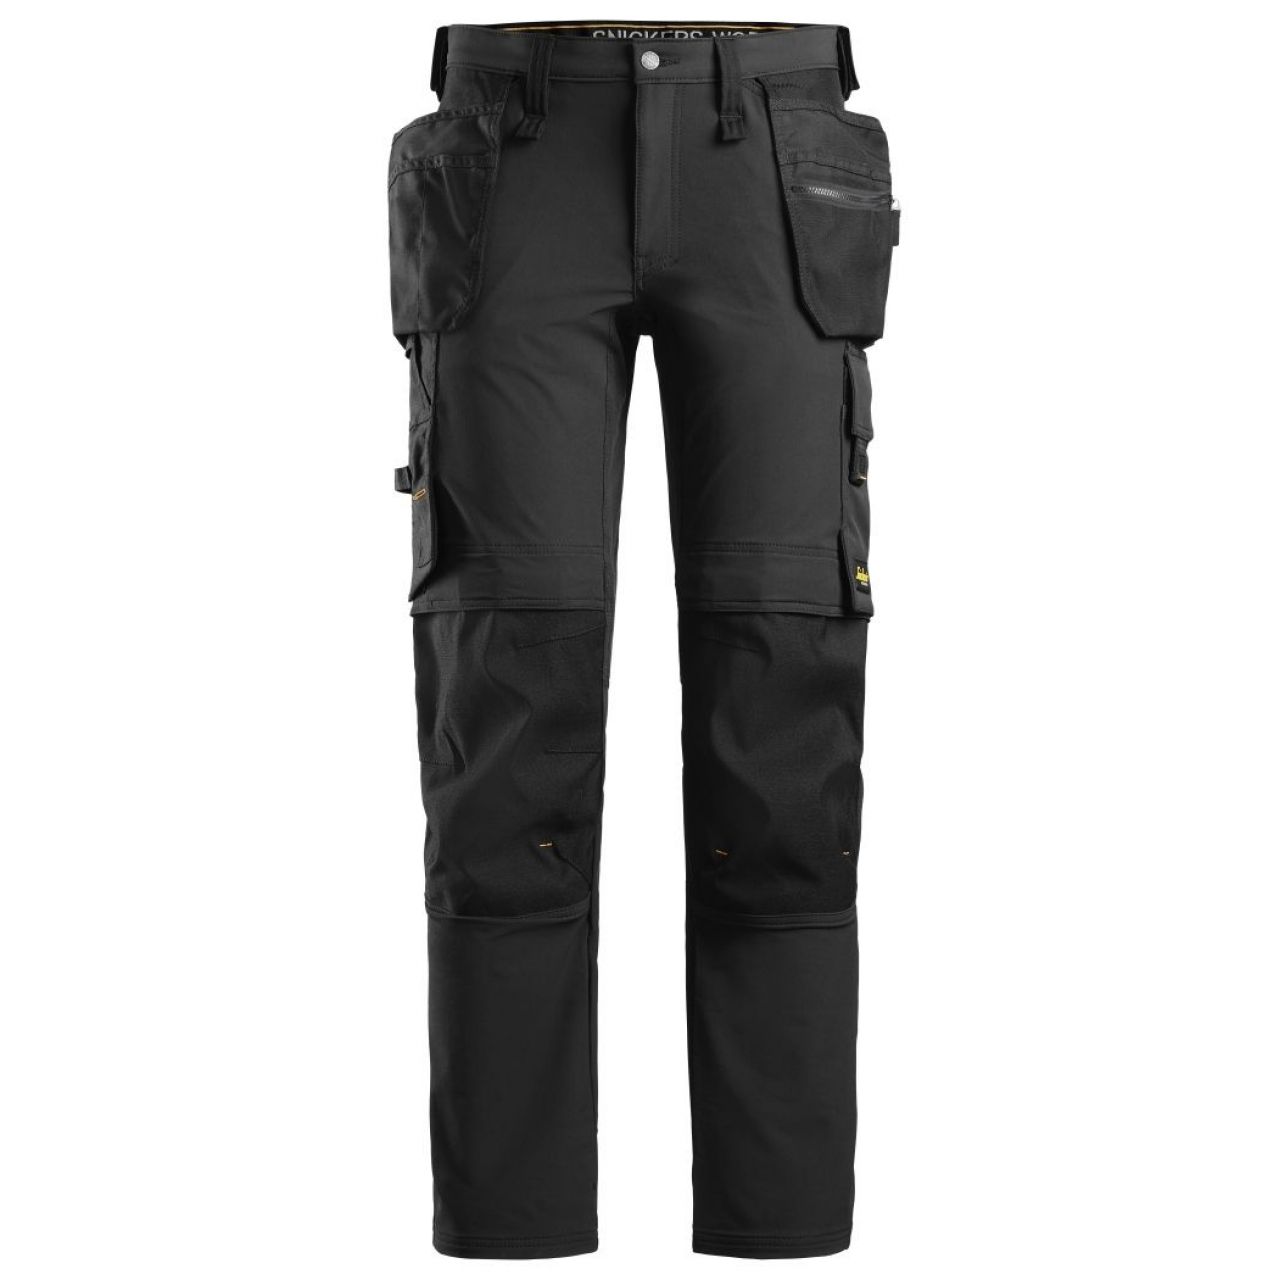 Pantalon elastico AllroundWork bolsillos flotantes negro talla 148